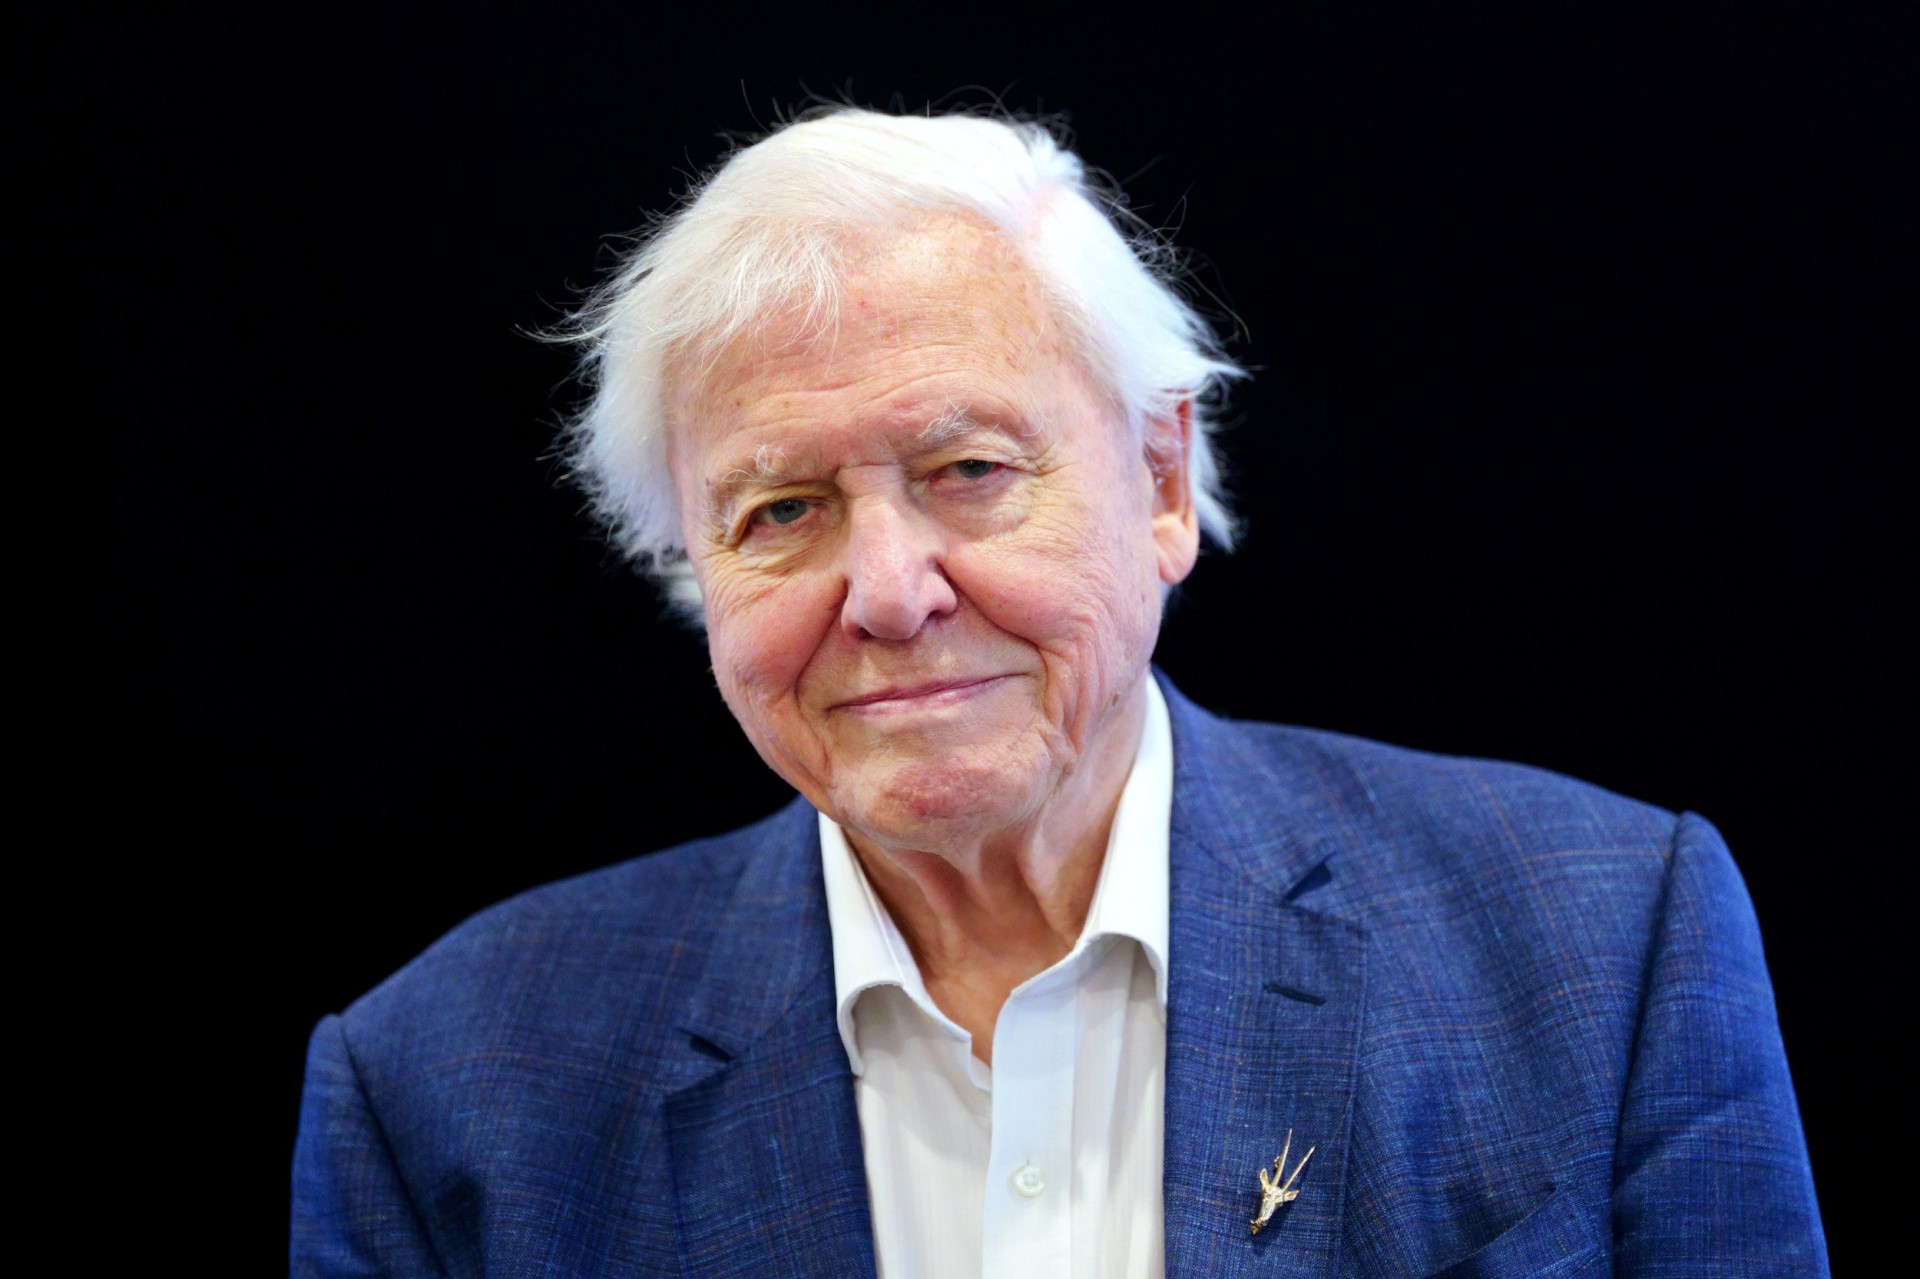 Sir David Attenborough bringing back huge series at 97 years old